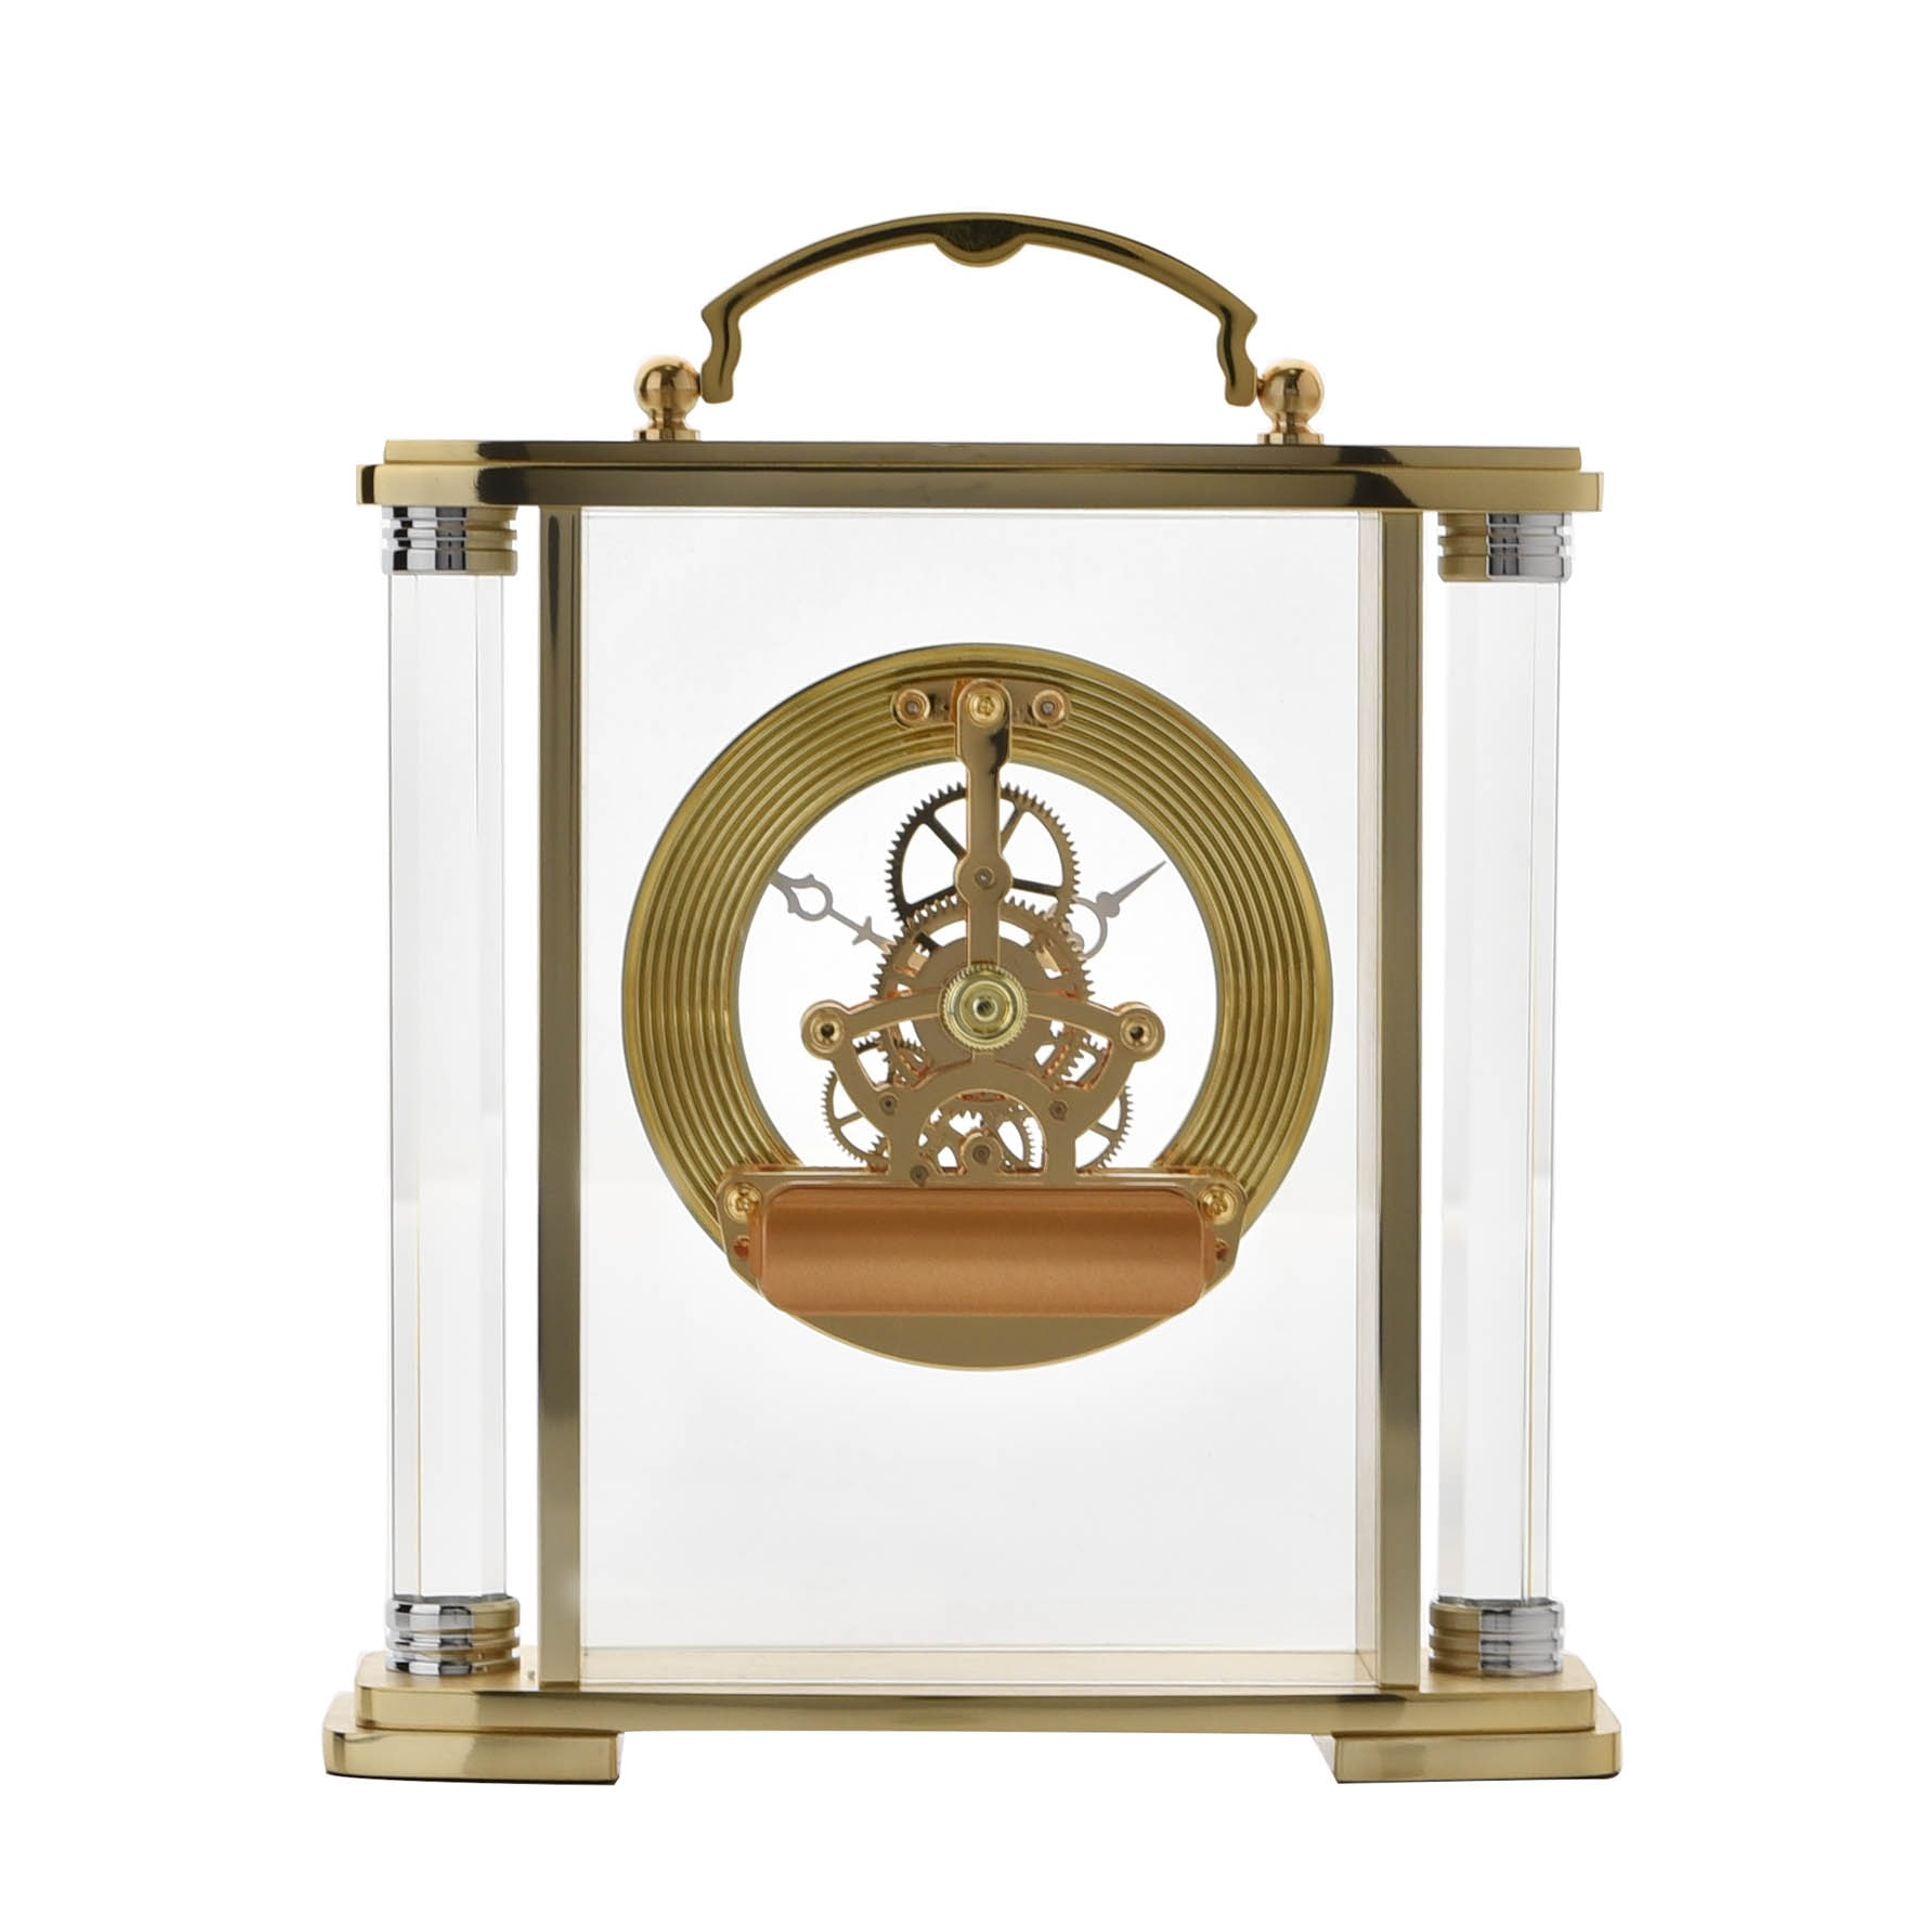 WM. Widdop Glass and Gold Aluminium Carriage Clock